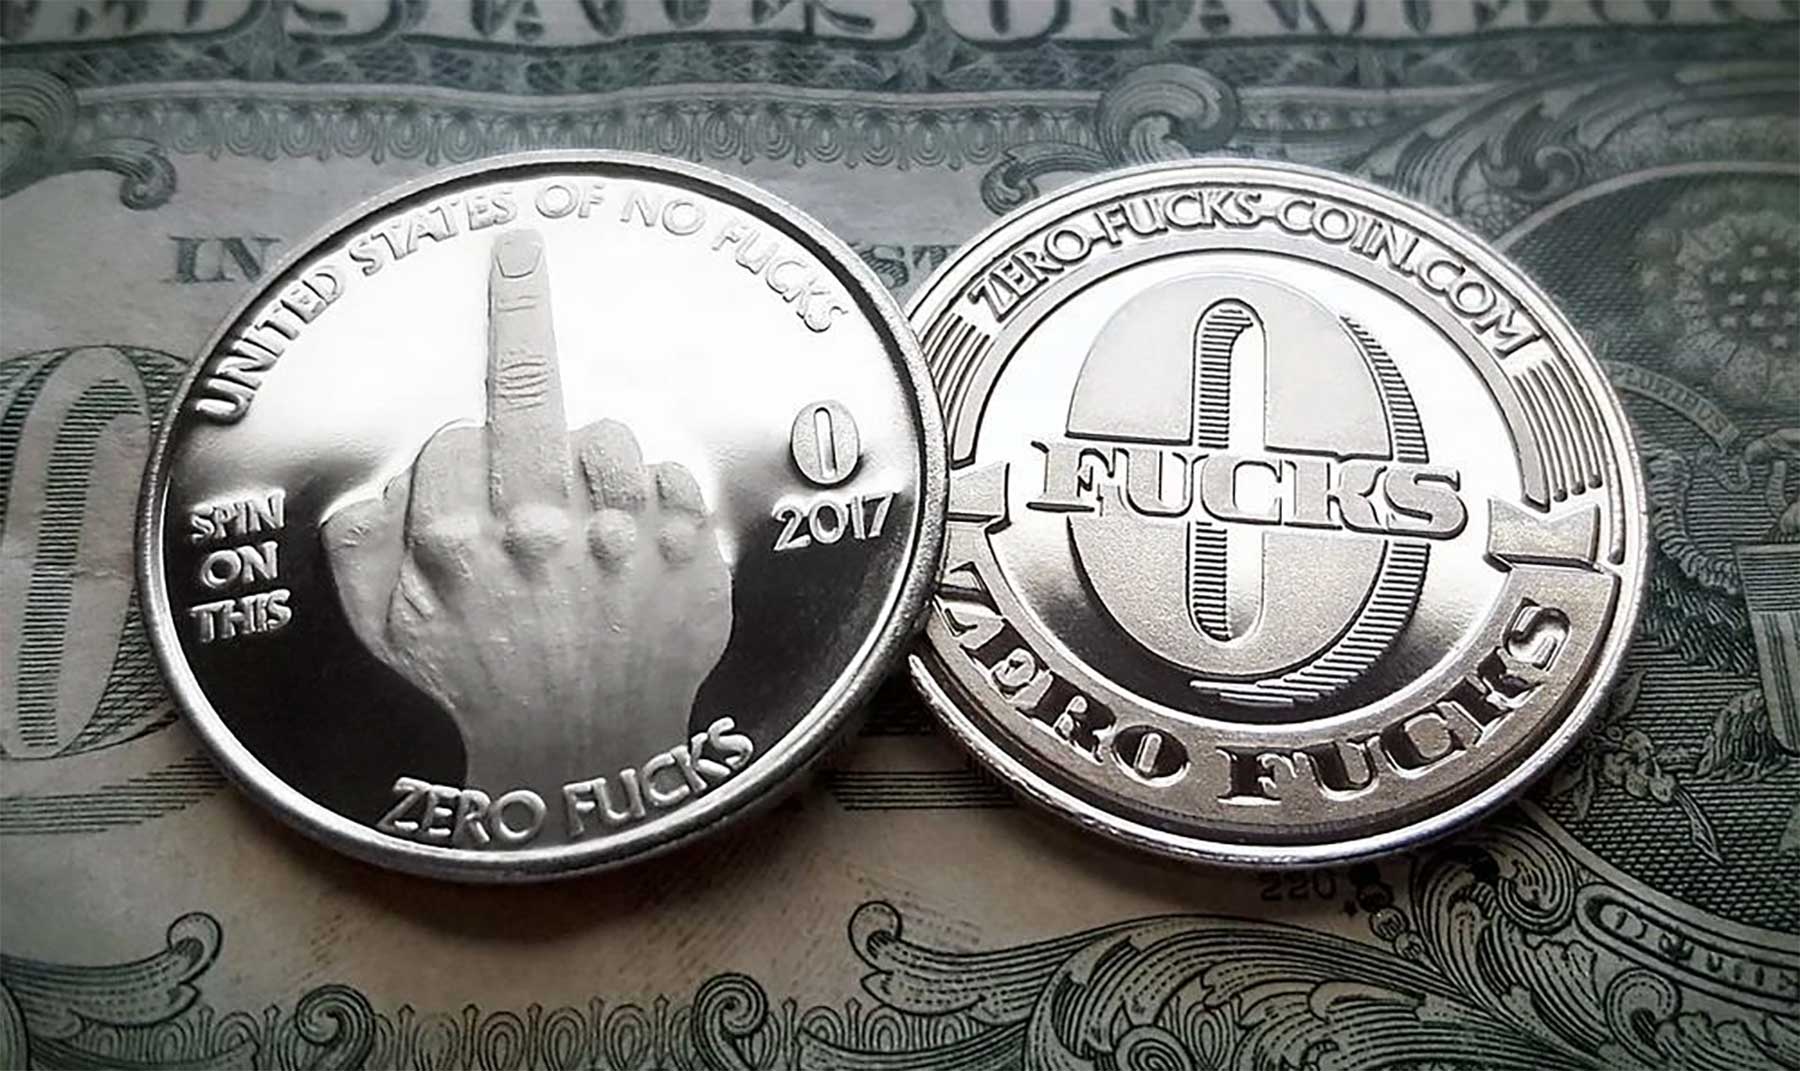 „Zero Fucks Coins“